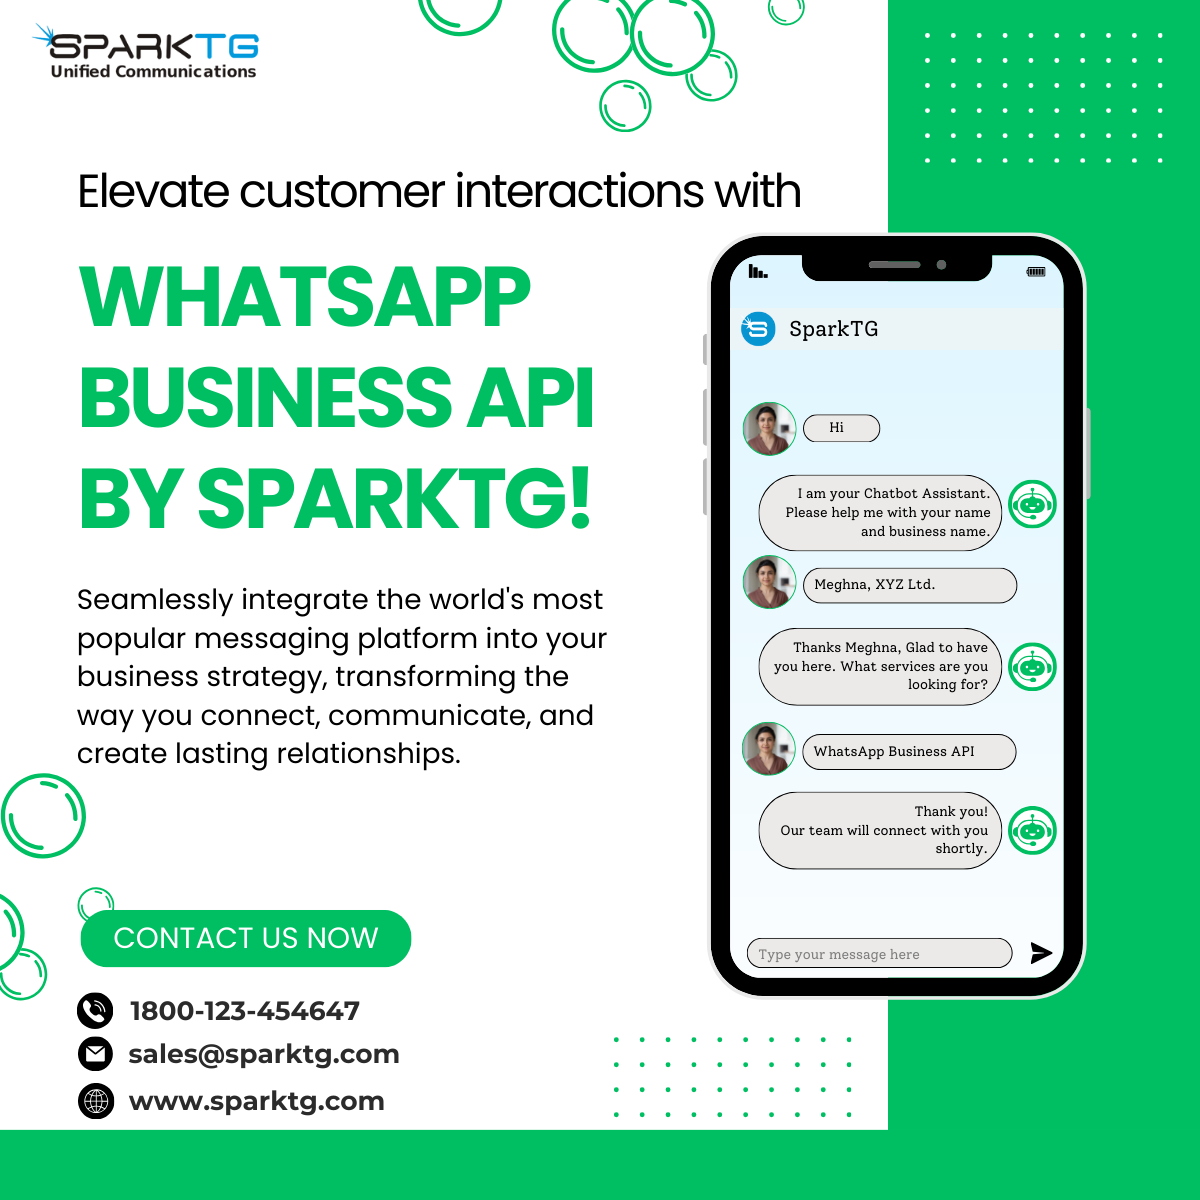 Whatsapp Business API - SparkTG